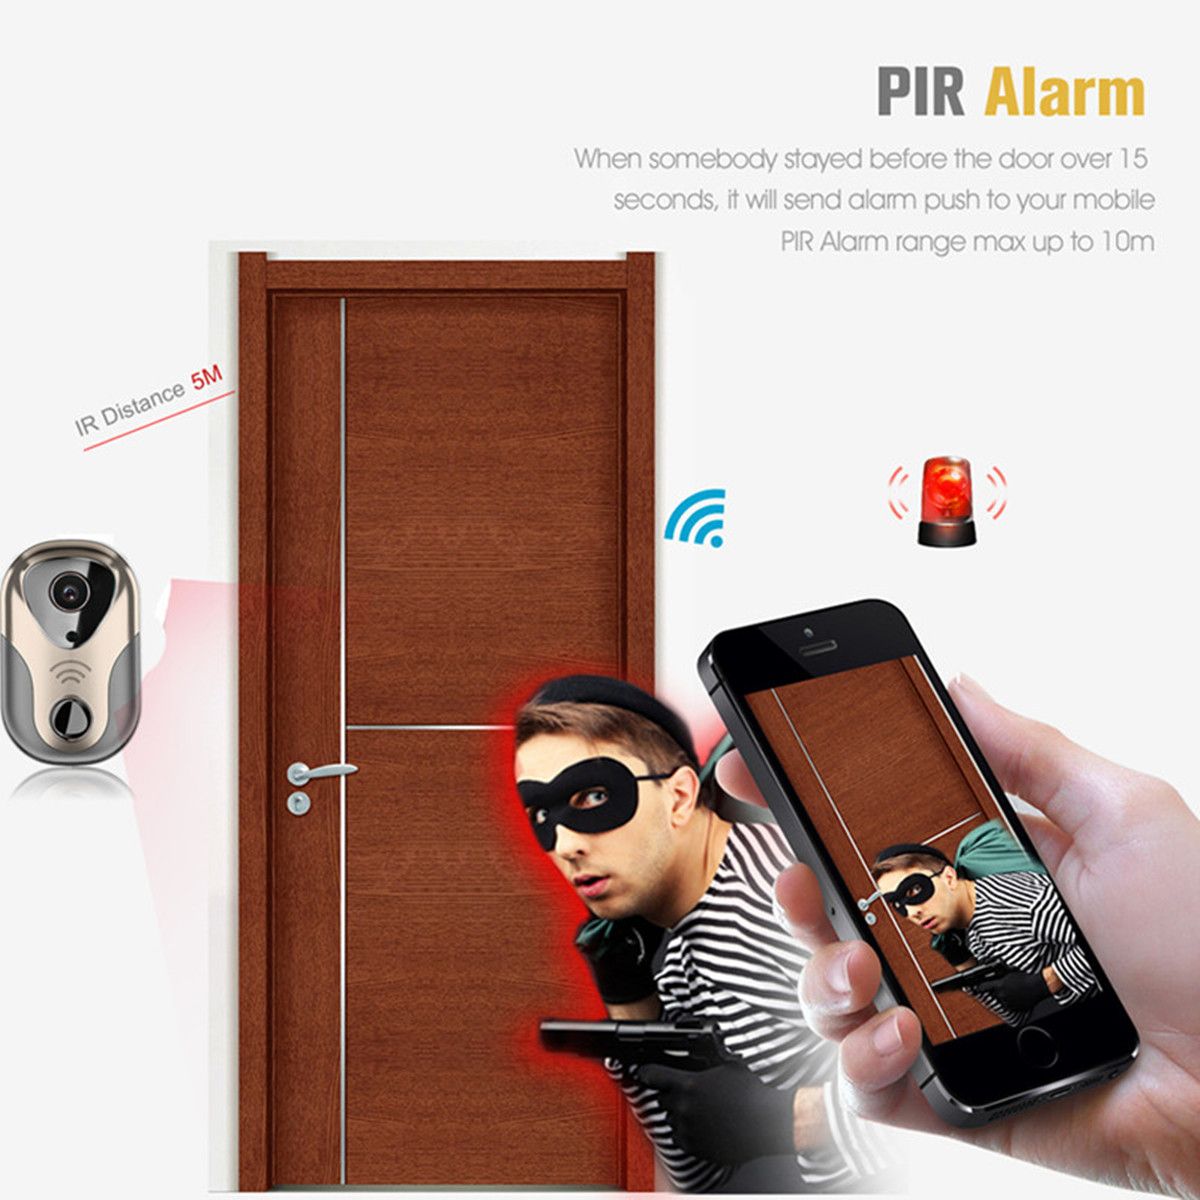 Wireless-Wifi-Video-Doorbell-Camera-Security-Monitor-Intercom-PIR-Night-Vision-1250021